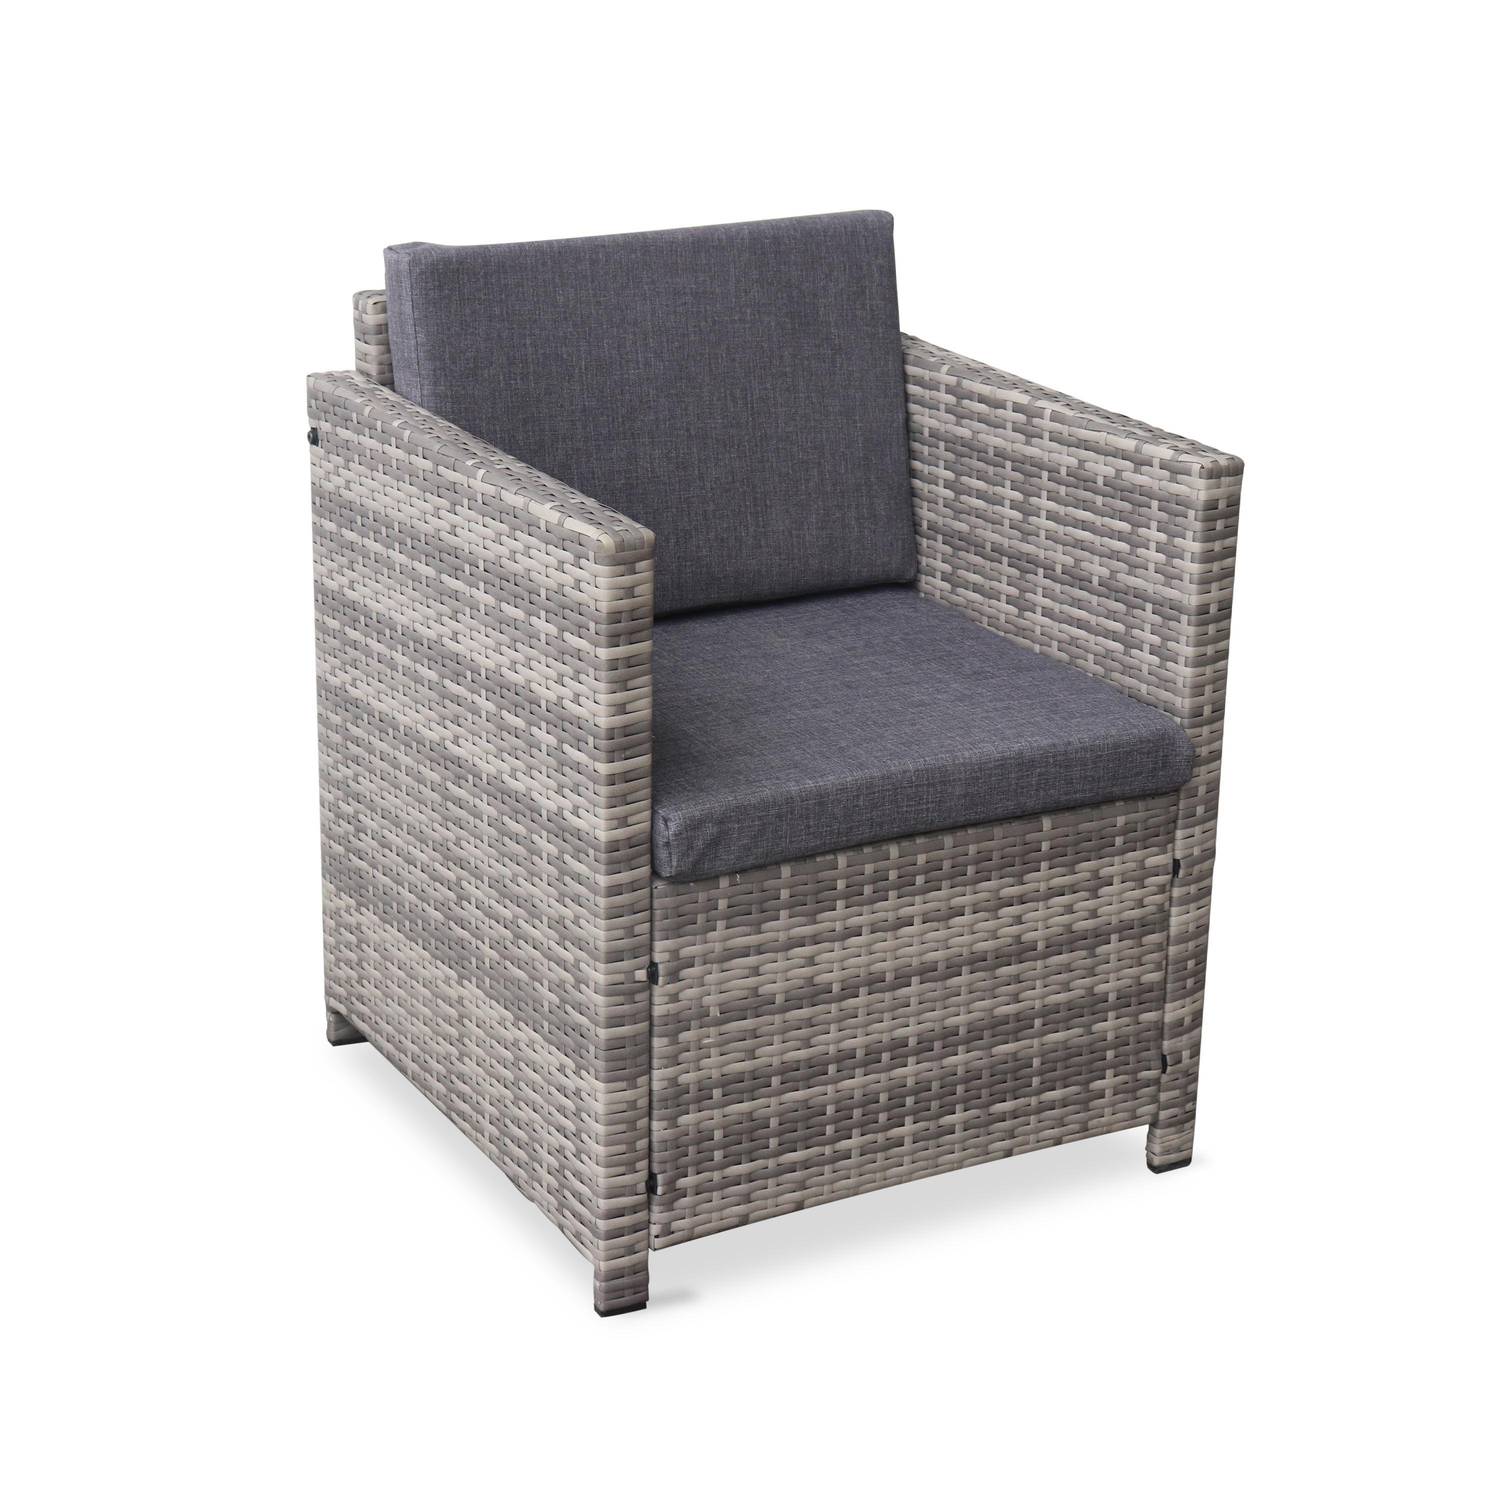 4-seater polyrattan garden sofa set - sofa, 2 armchairs, coffee table - Perugia - Mixed Grey rattan, Grey cushions Photo3